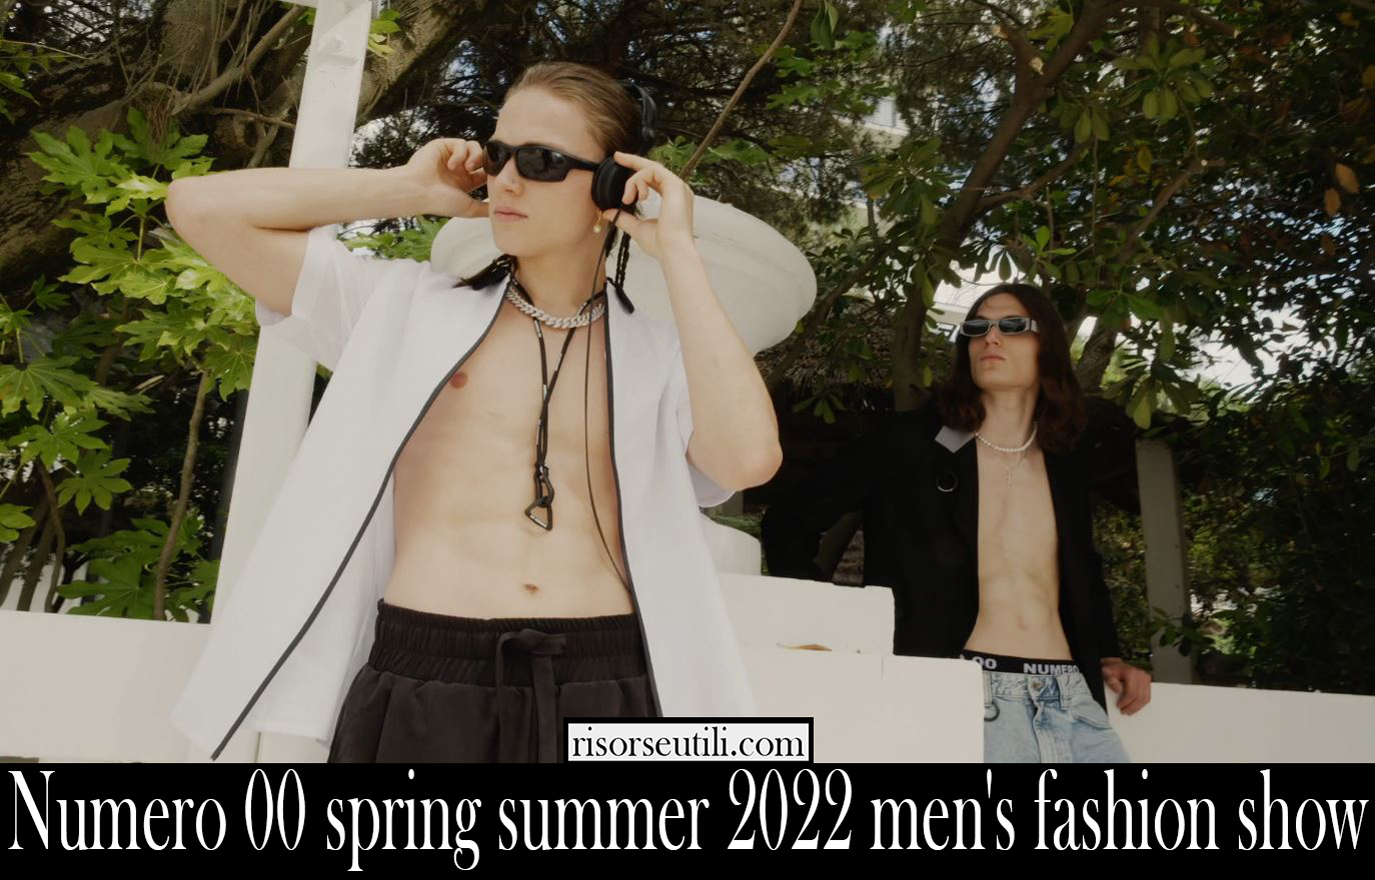 Numero 00 spring summer 2022 mens fashion show